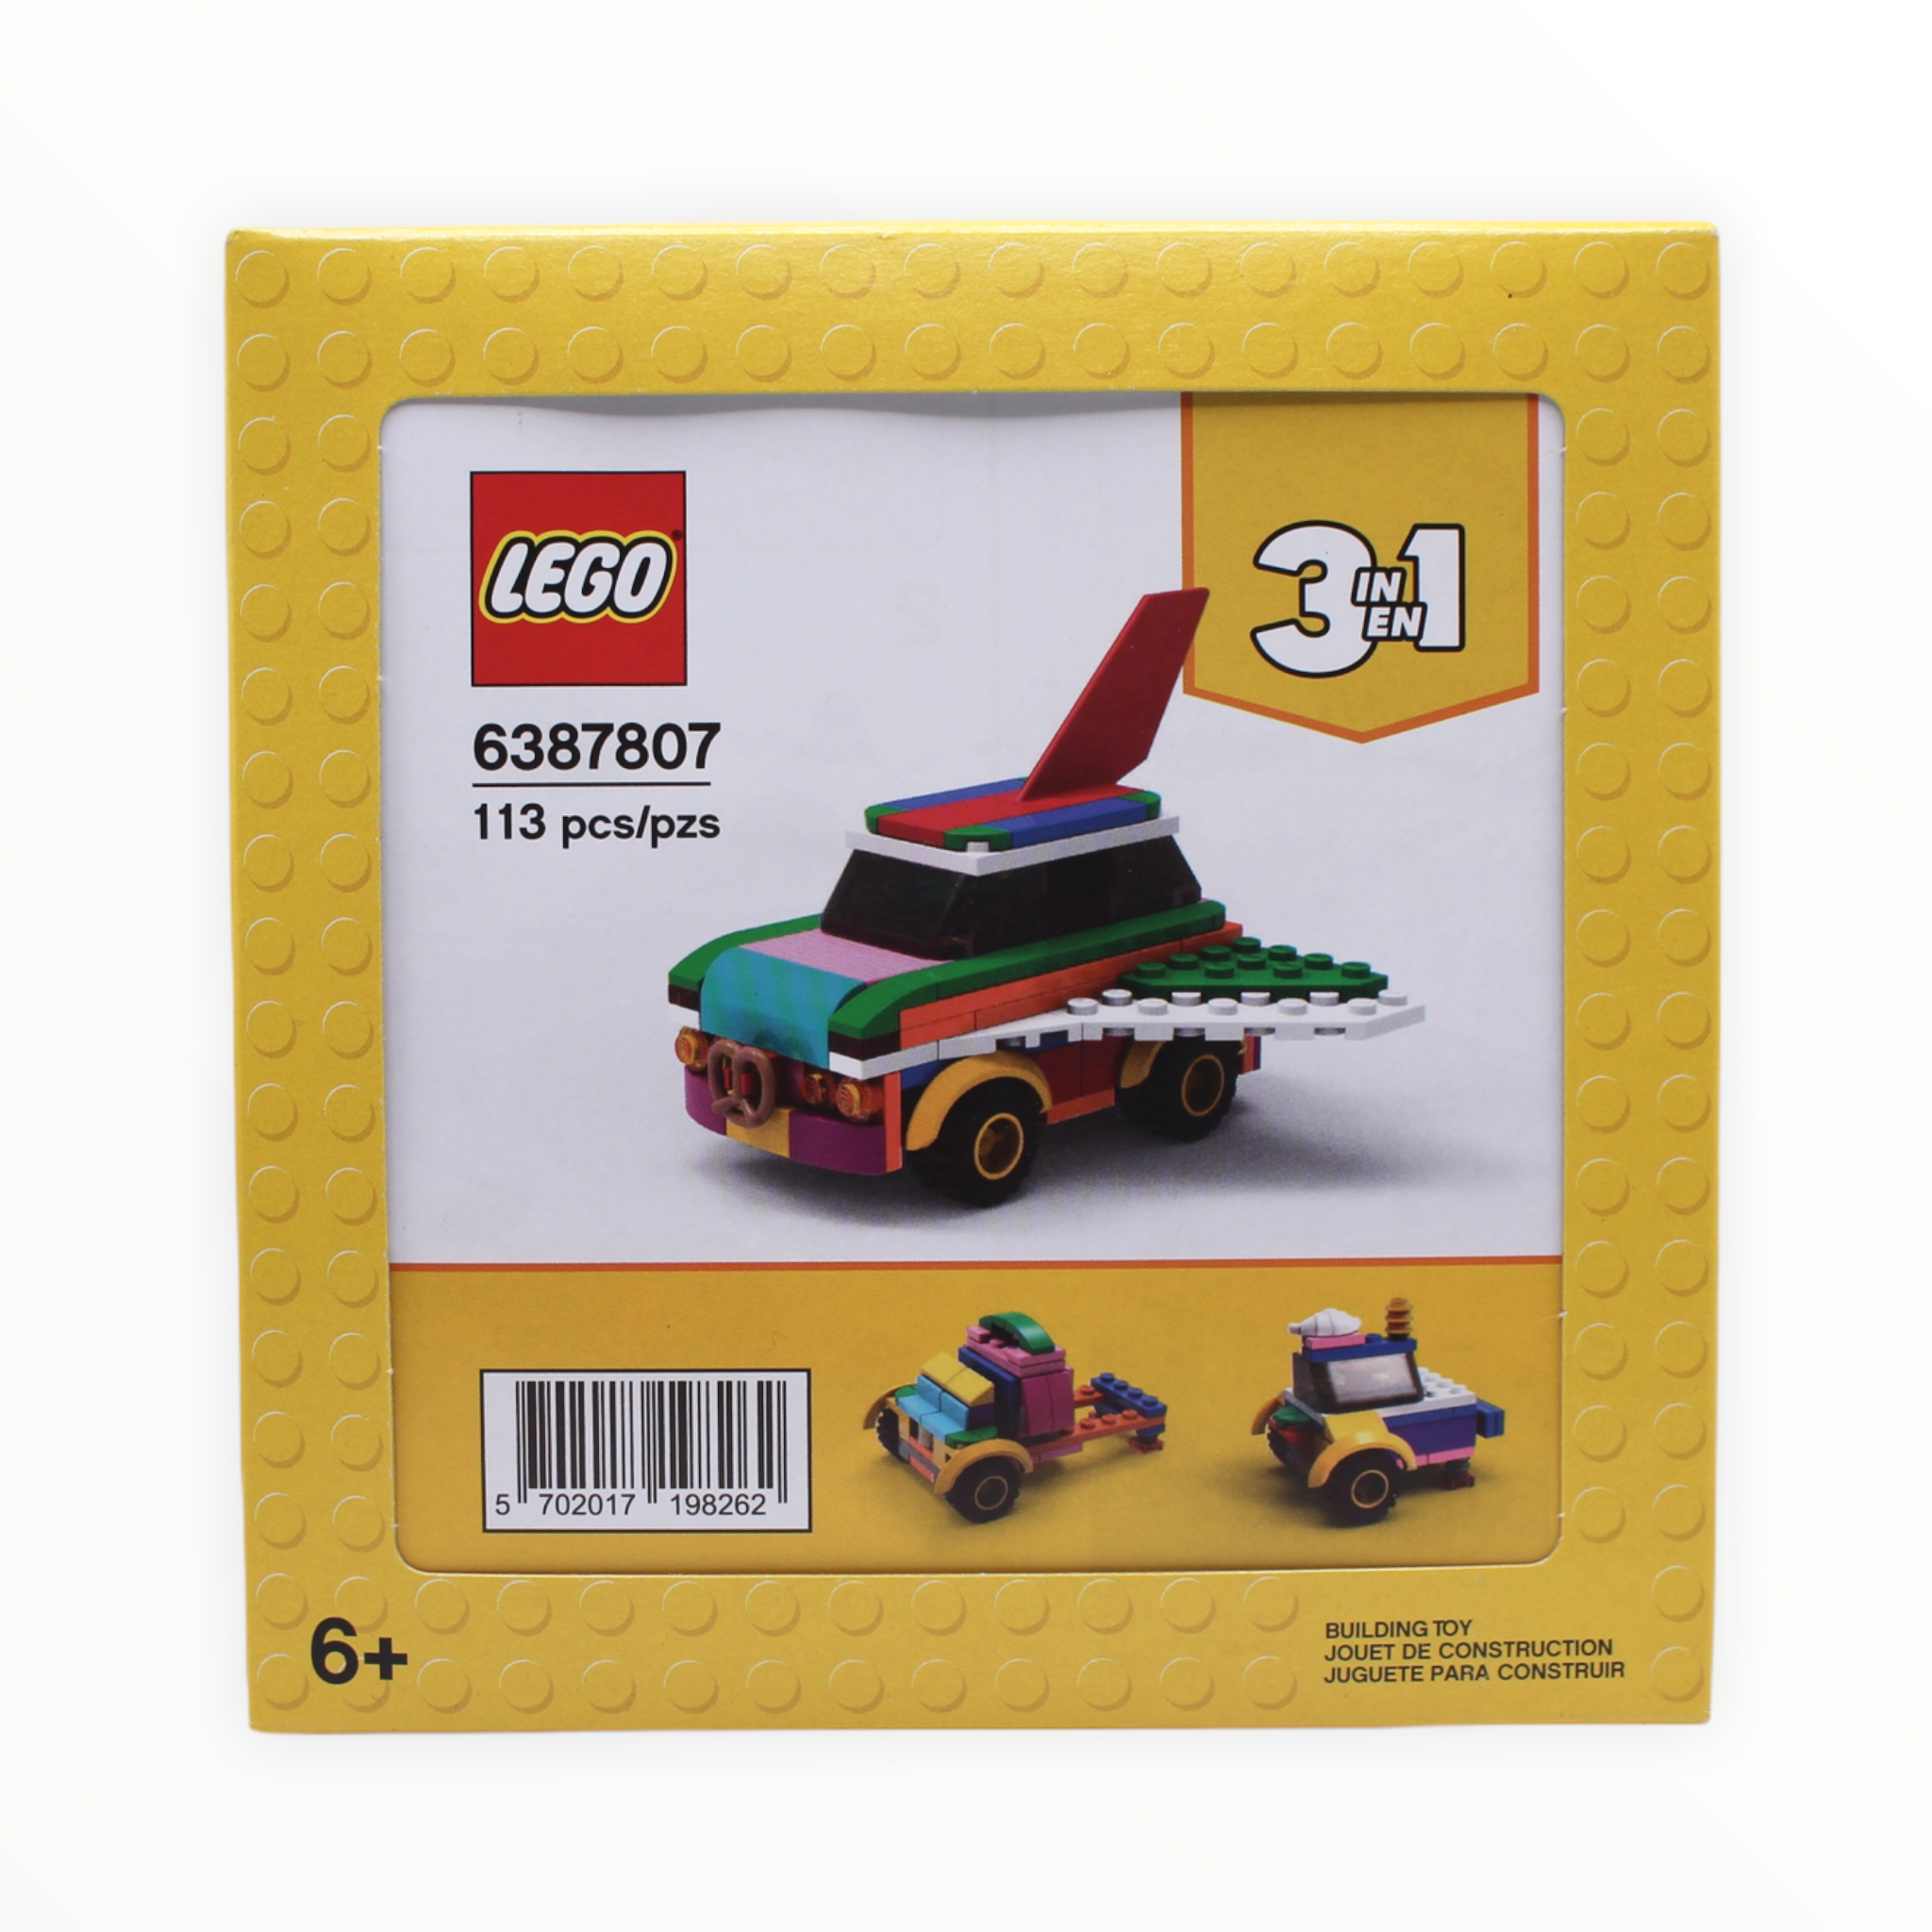 Retired Set 6387807 LEGO Rebuildable Flying Car